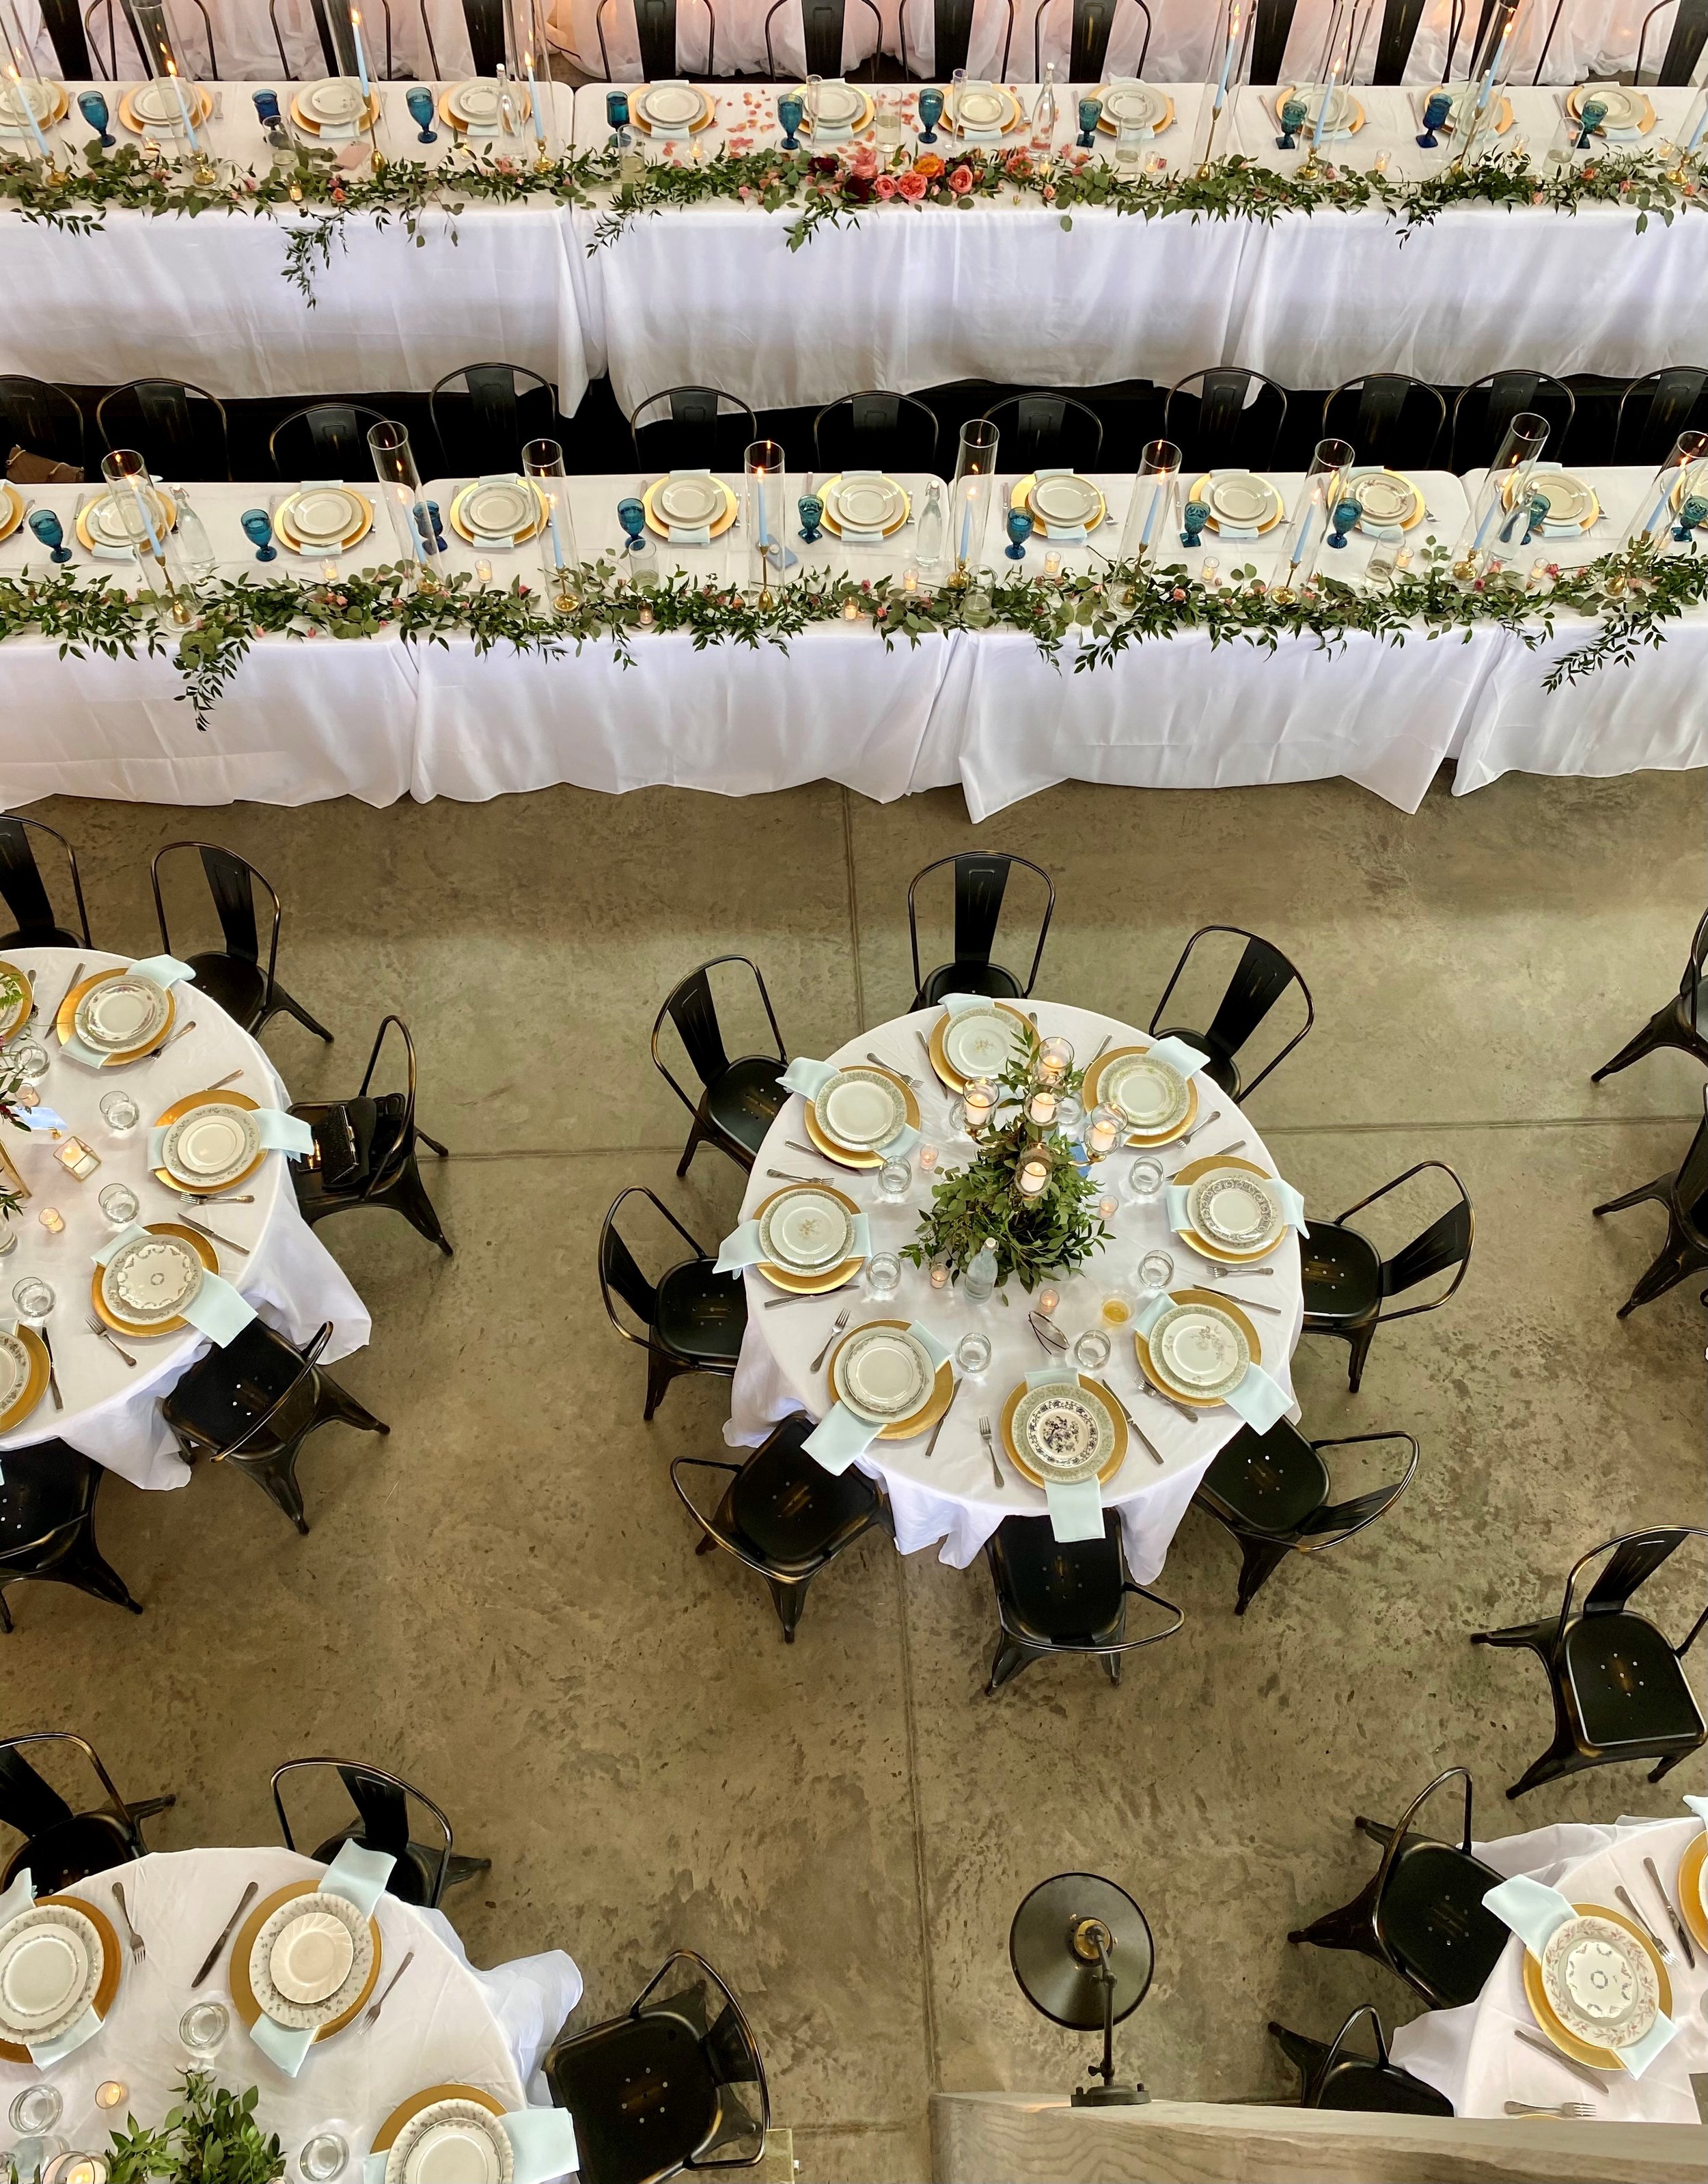 Table setting for weddings.jpg